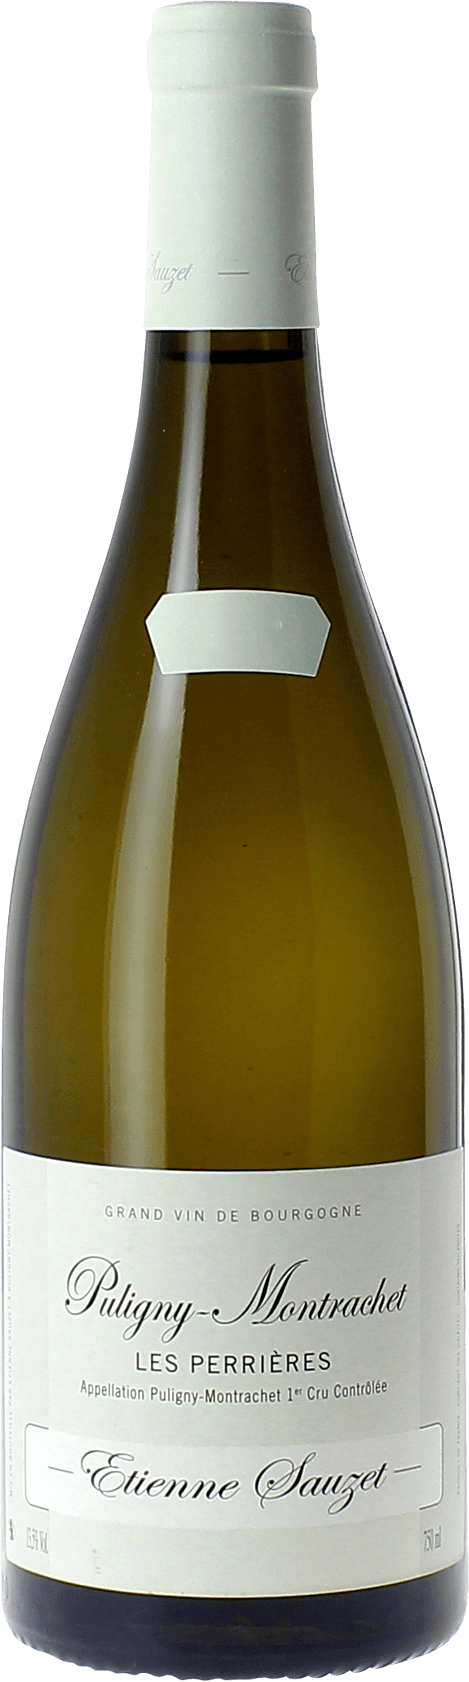 Puligny montrachet 1er cru perrires 2015 Domaine SAUZET, Bourgogne blanc